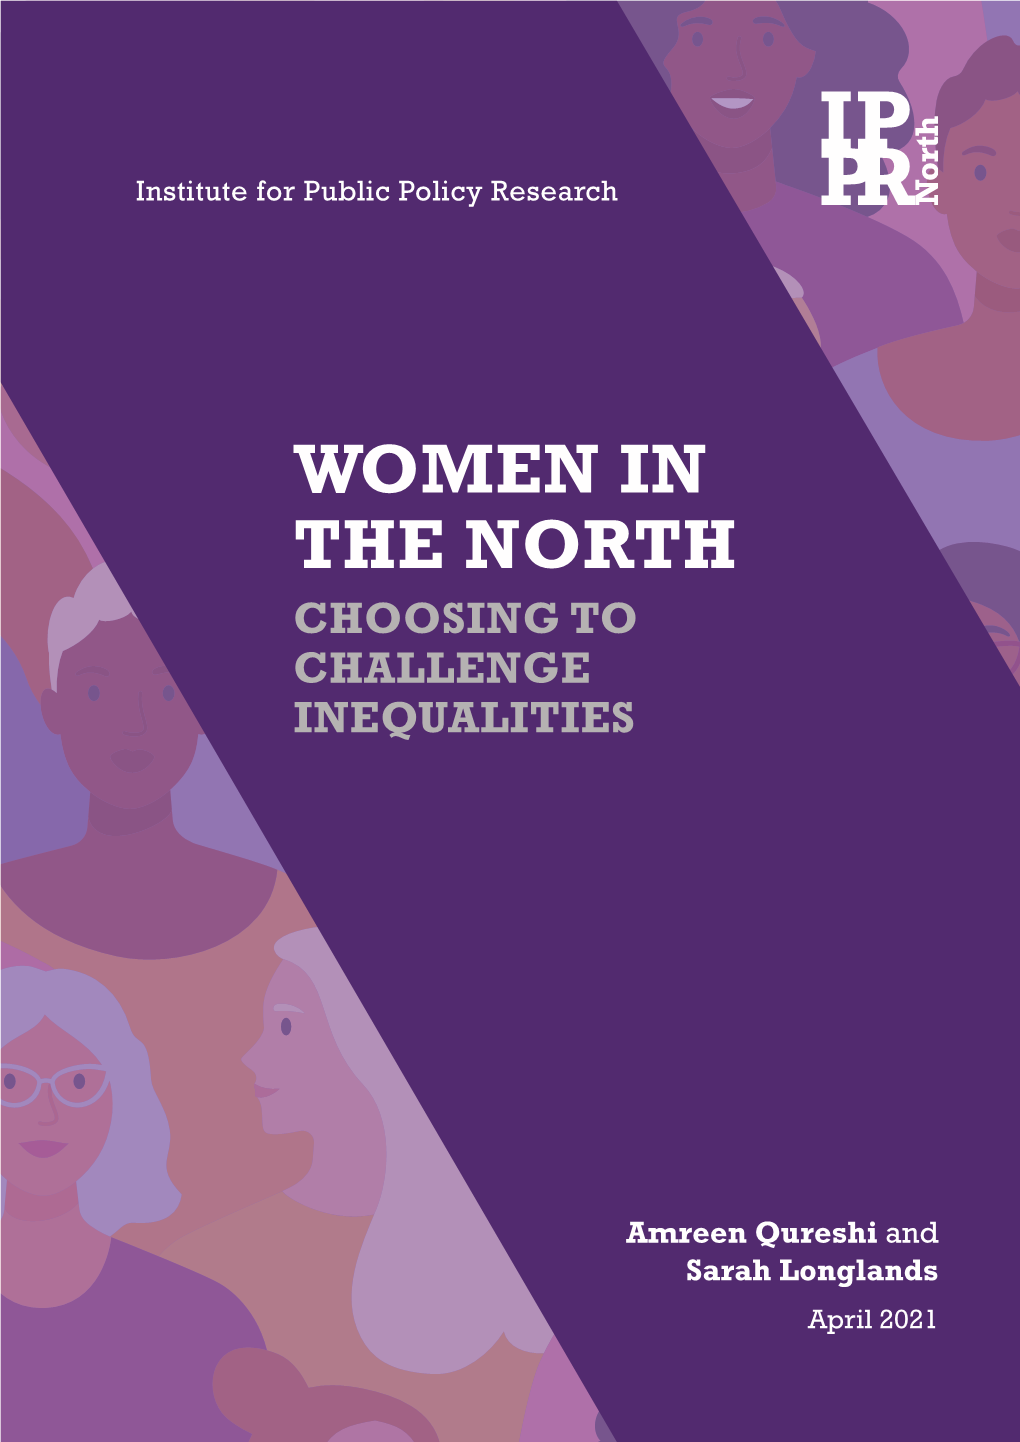 Women in the North: Choosing to Challenge Inequalities, IPPR North